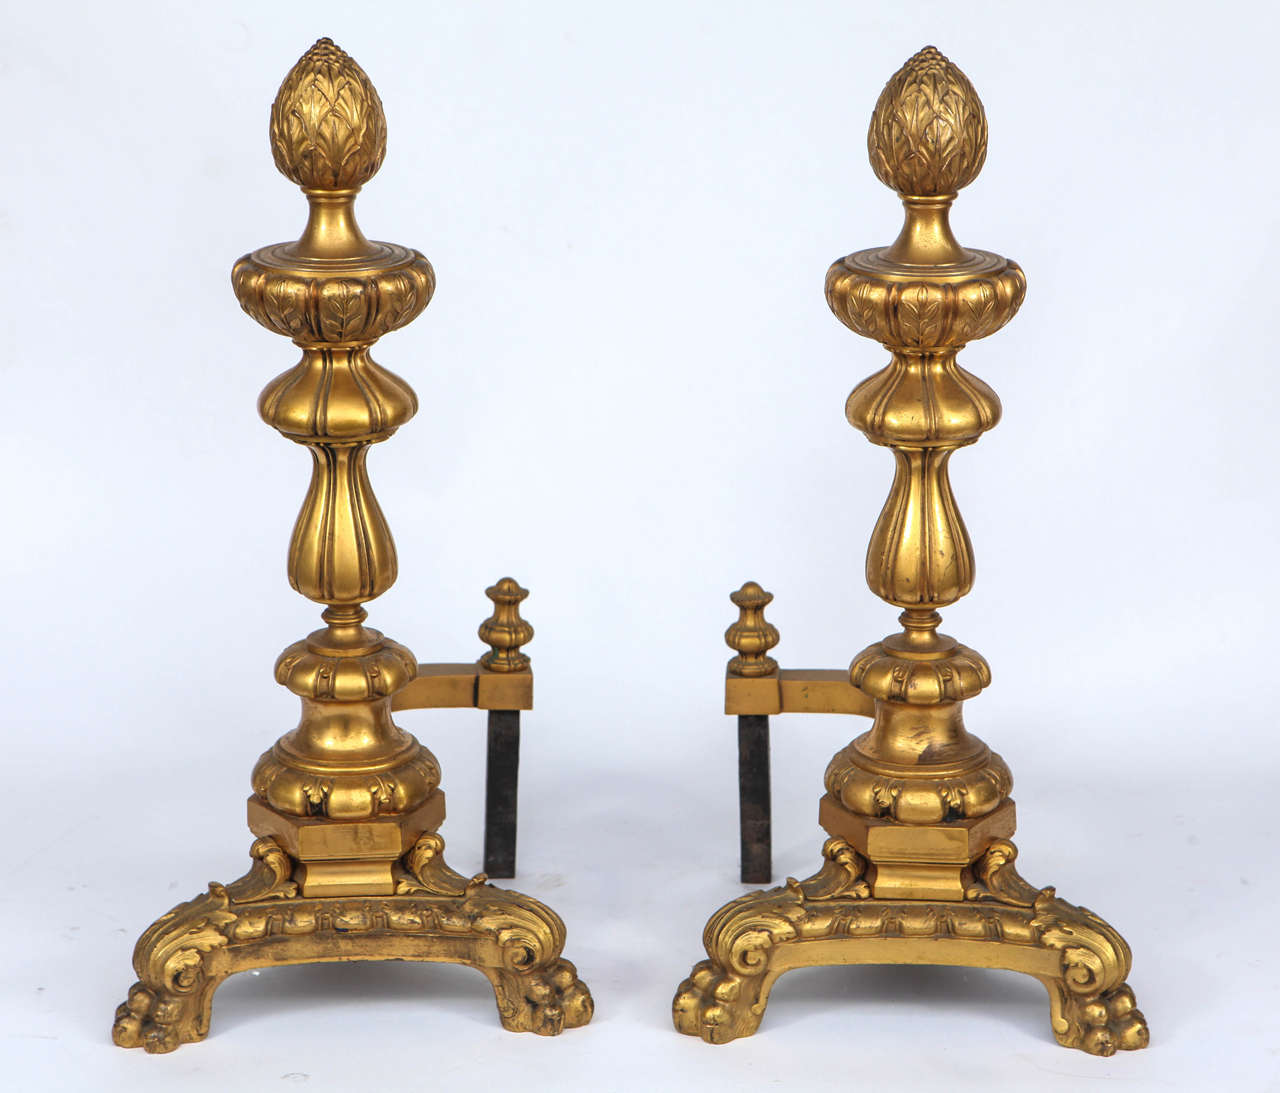 Pair of very fine late 19th century, French doré bronze andirons.